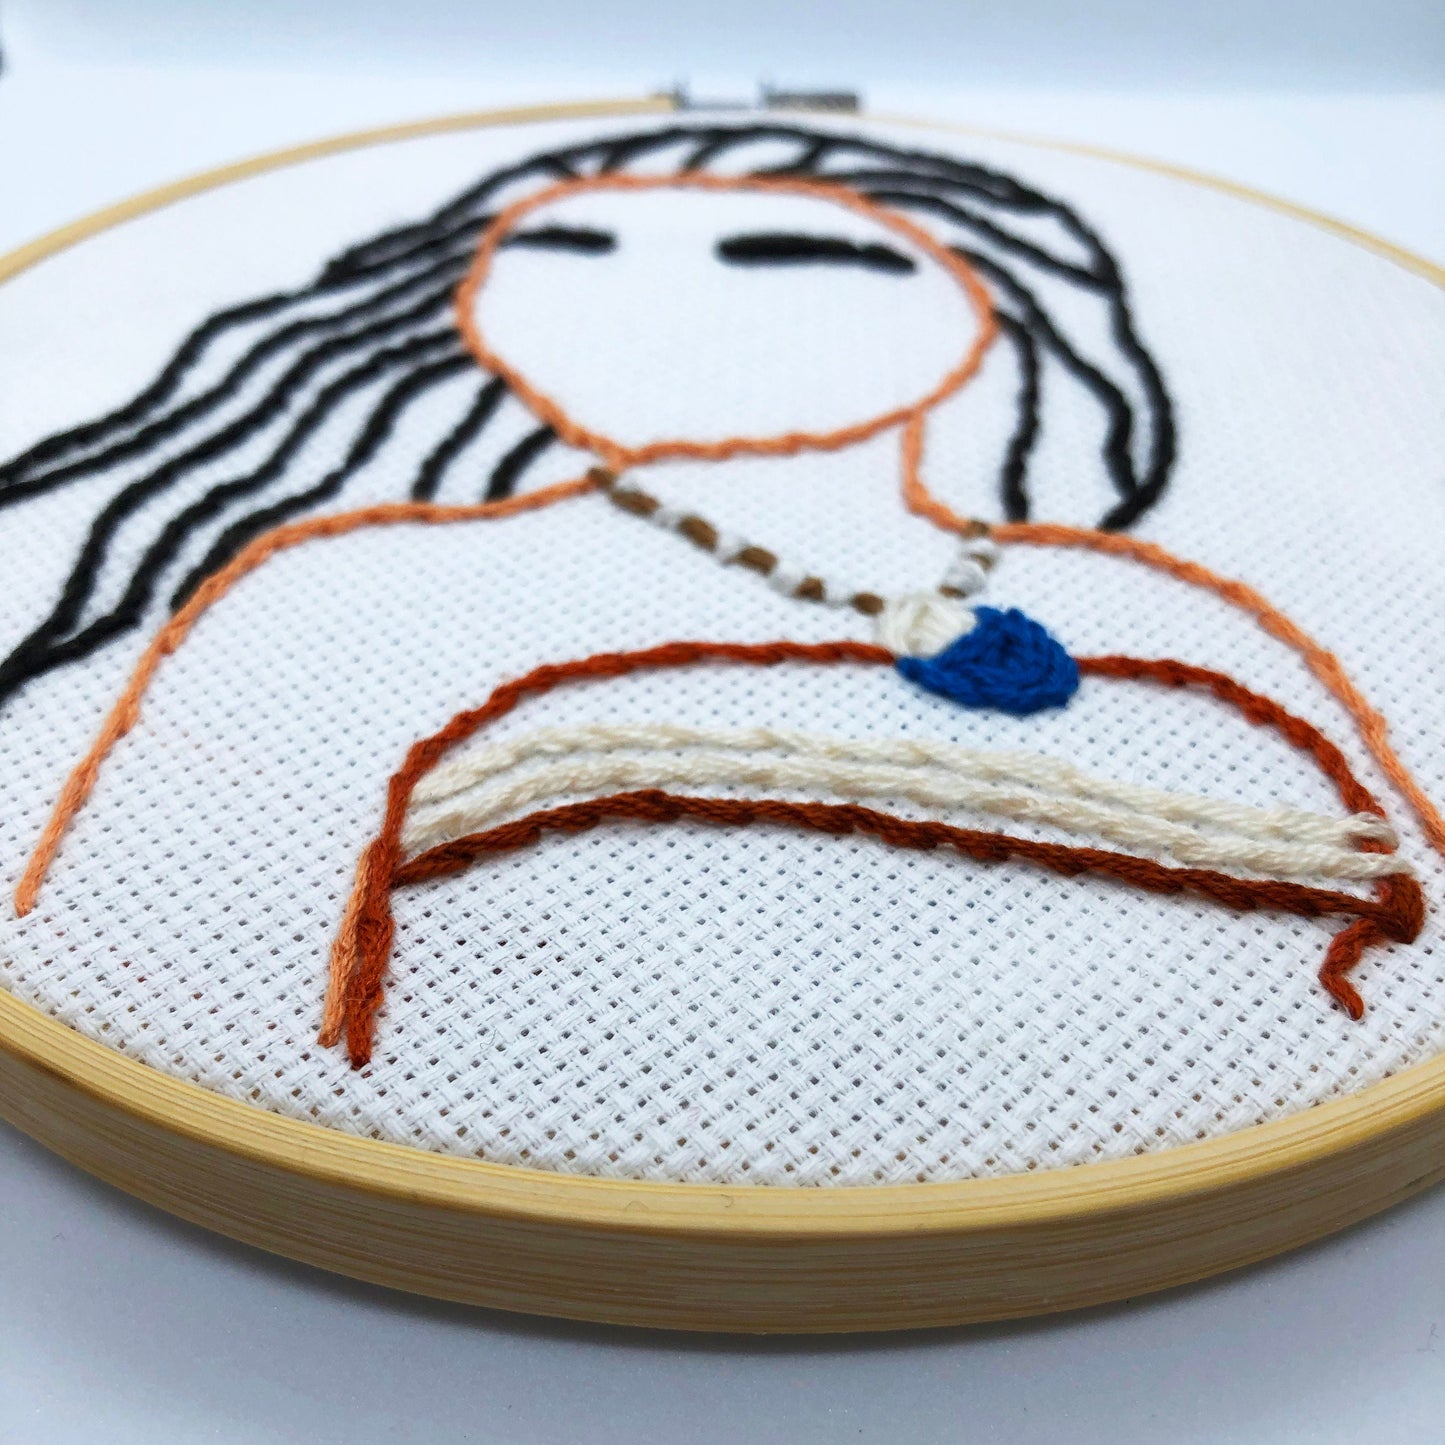 Moana embroidery